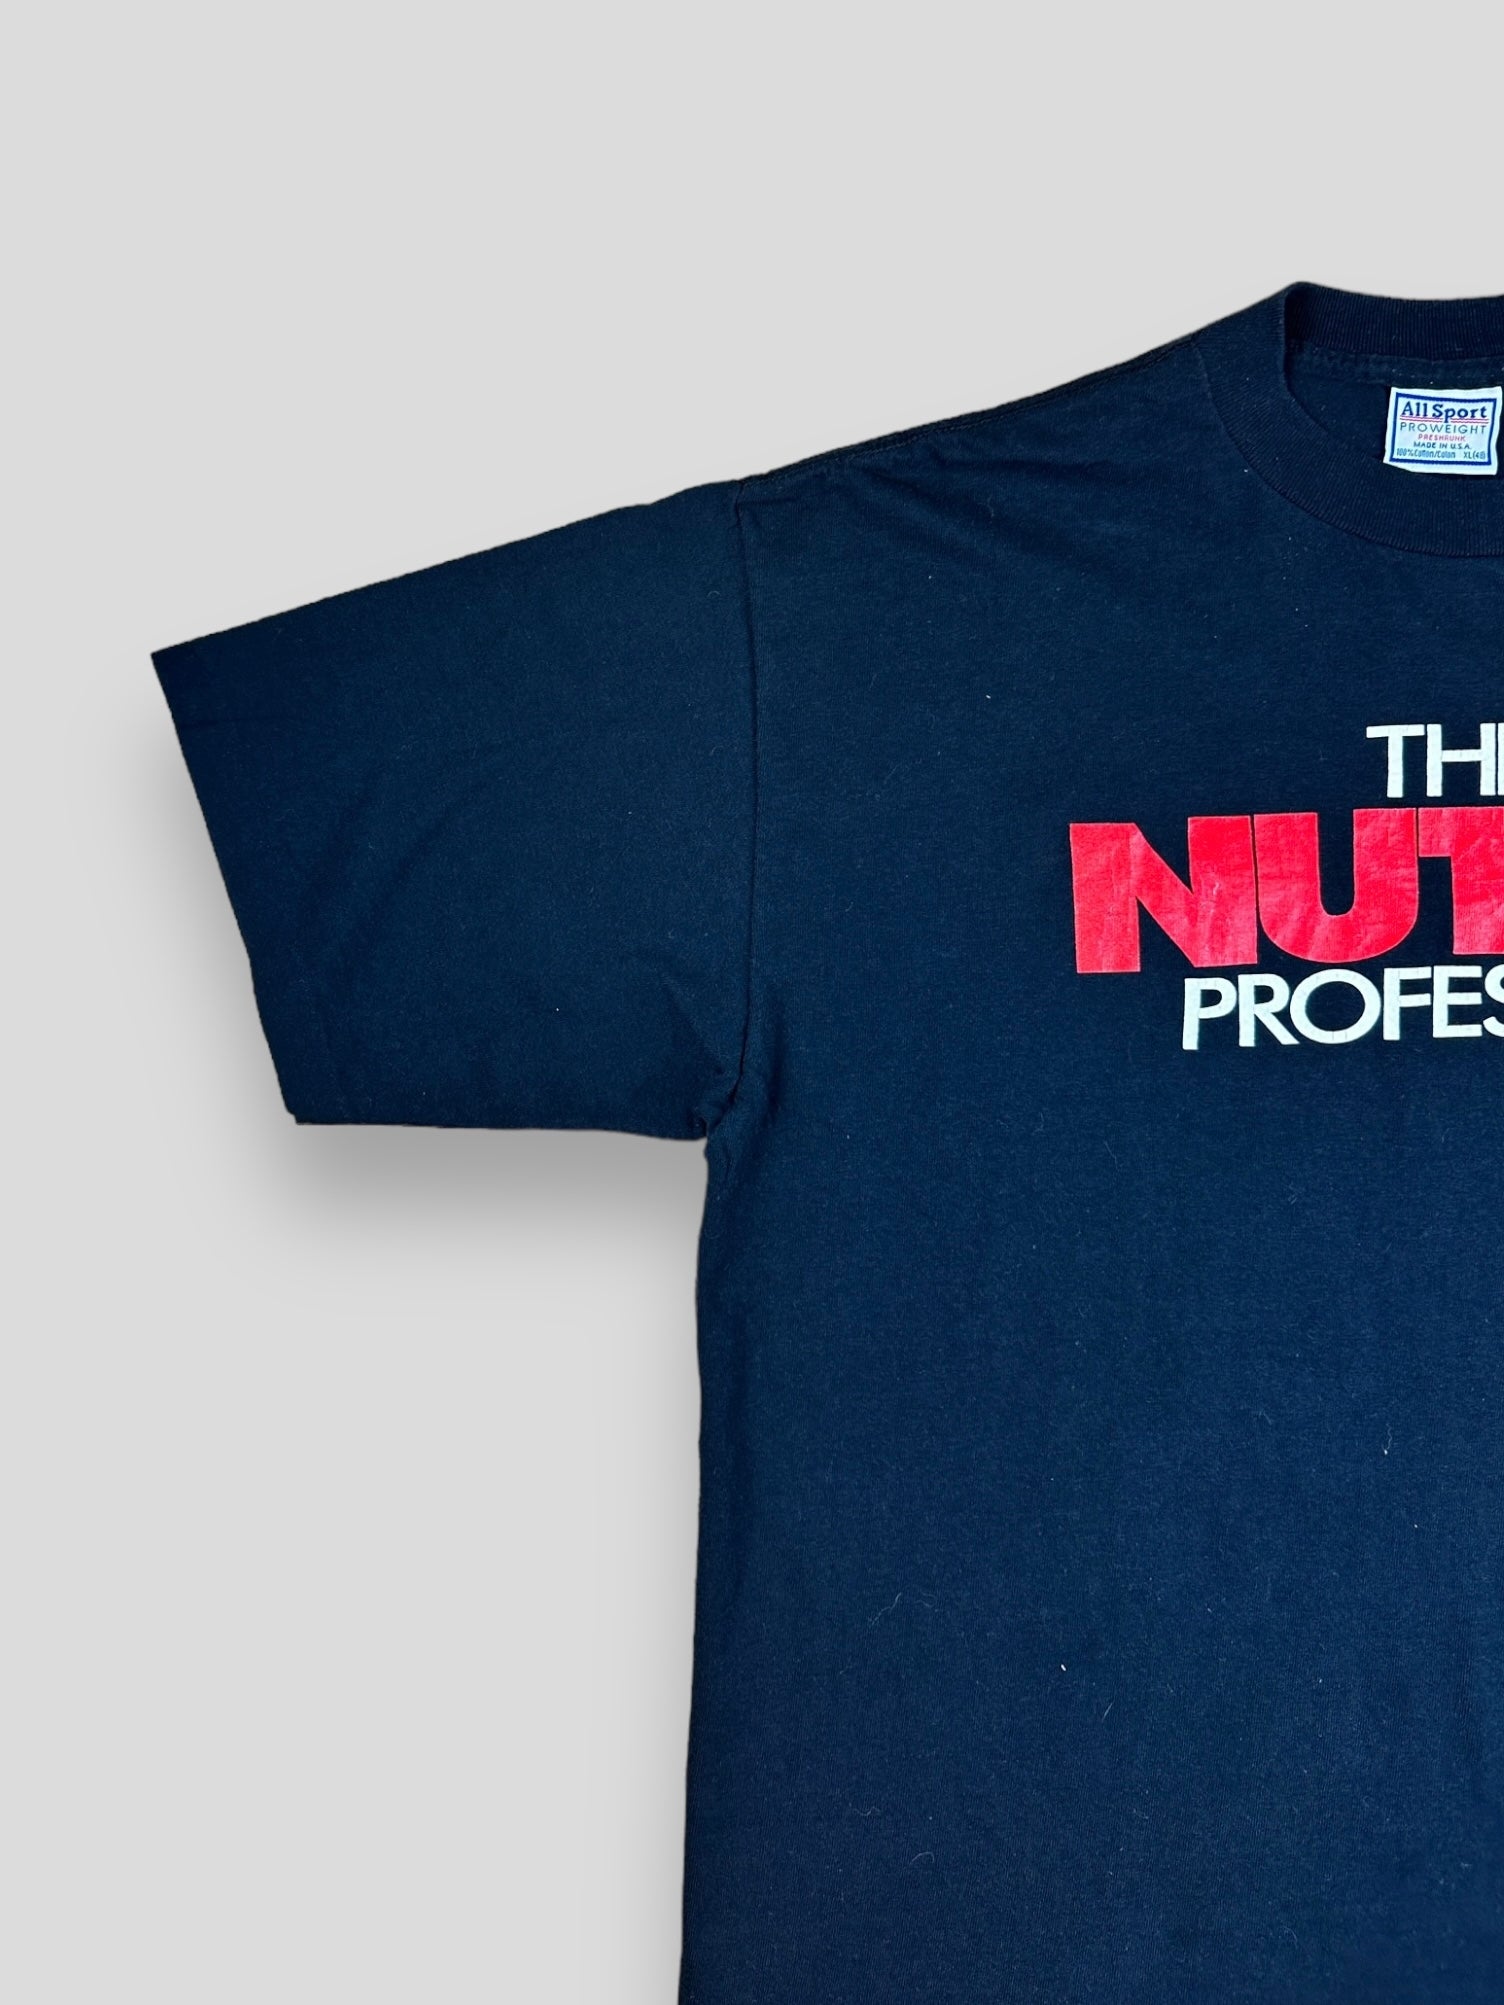 1996 The Nutty Professor vintage black tshirt